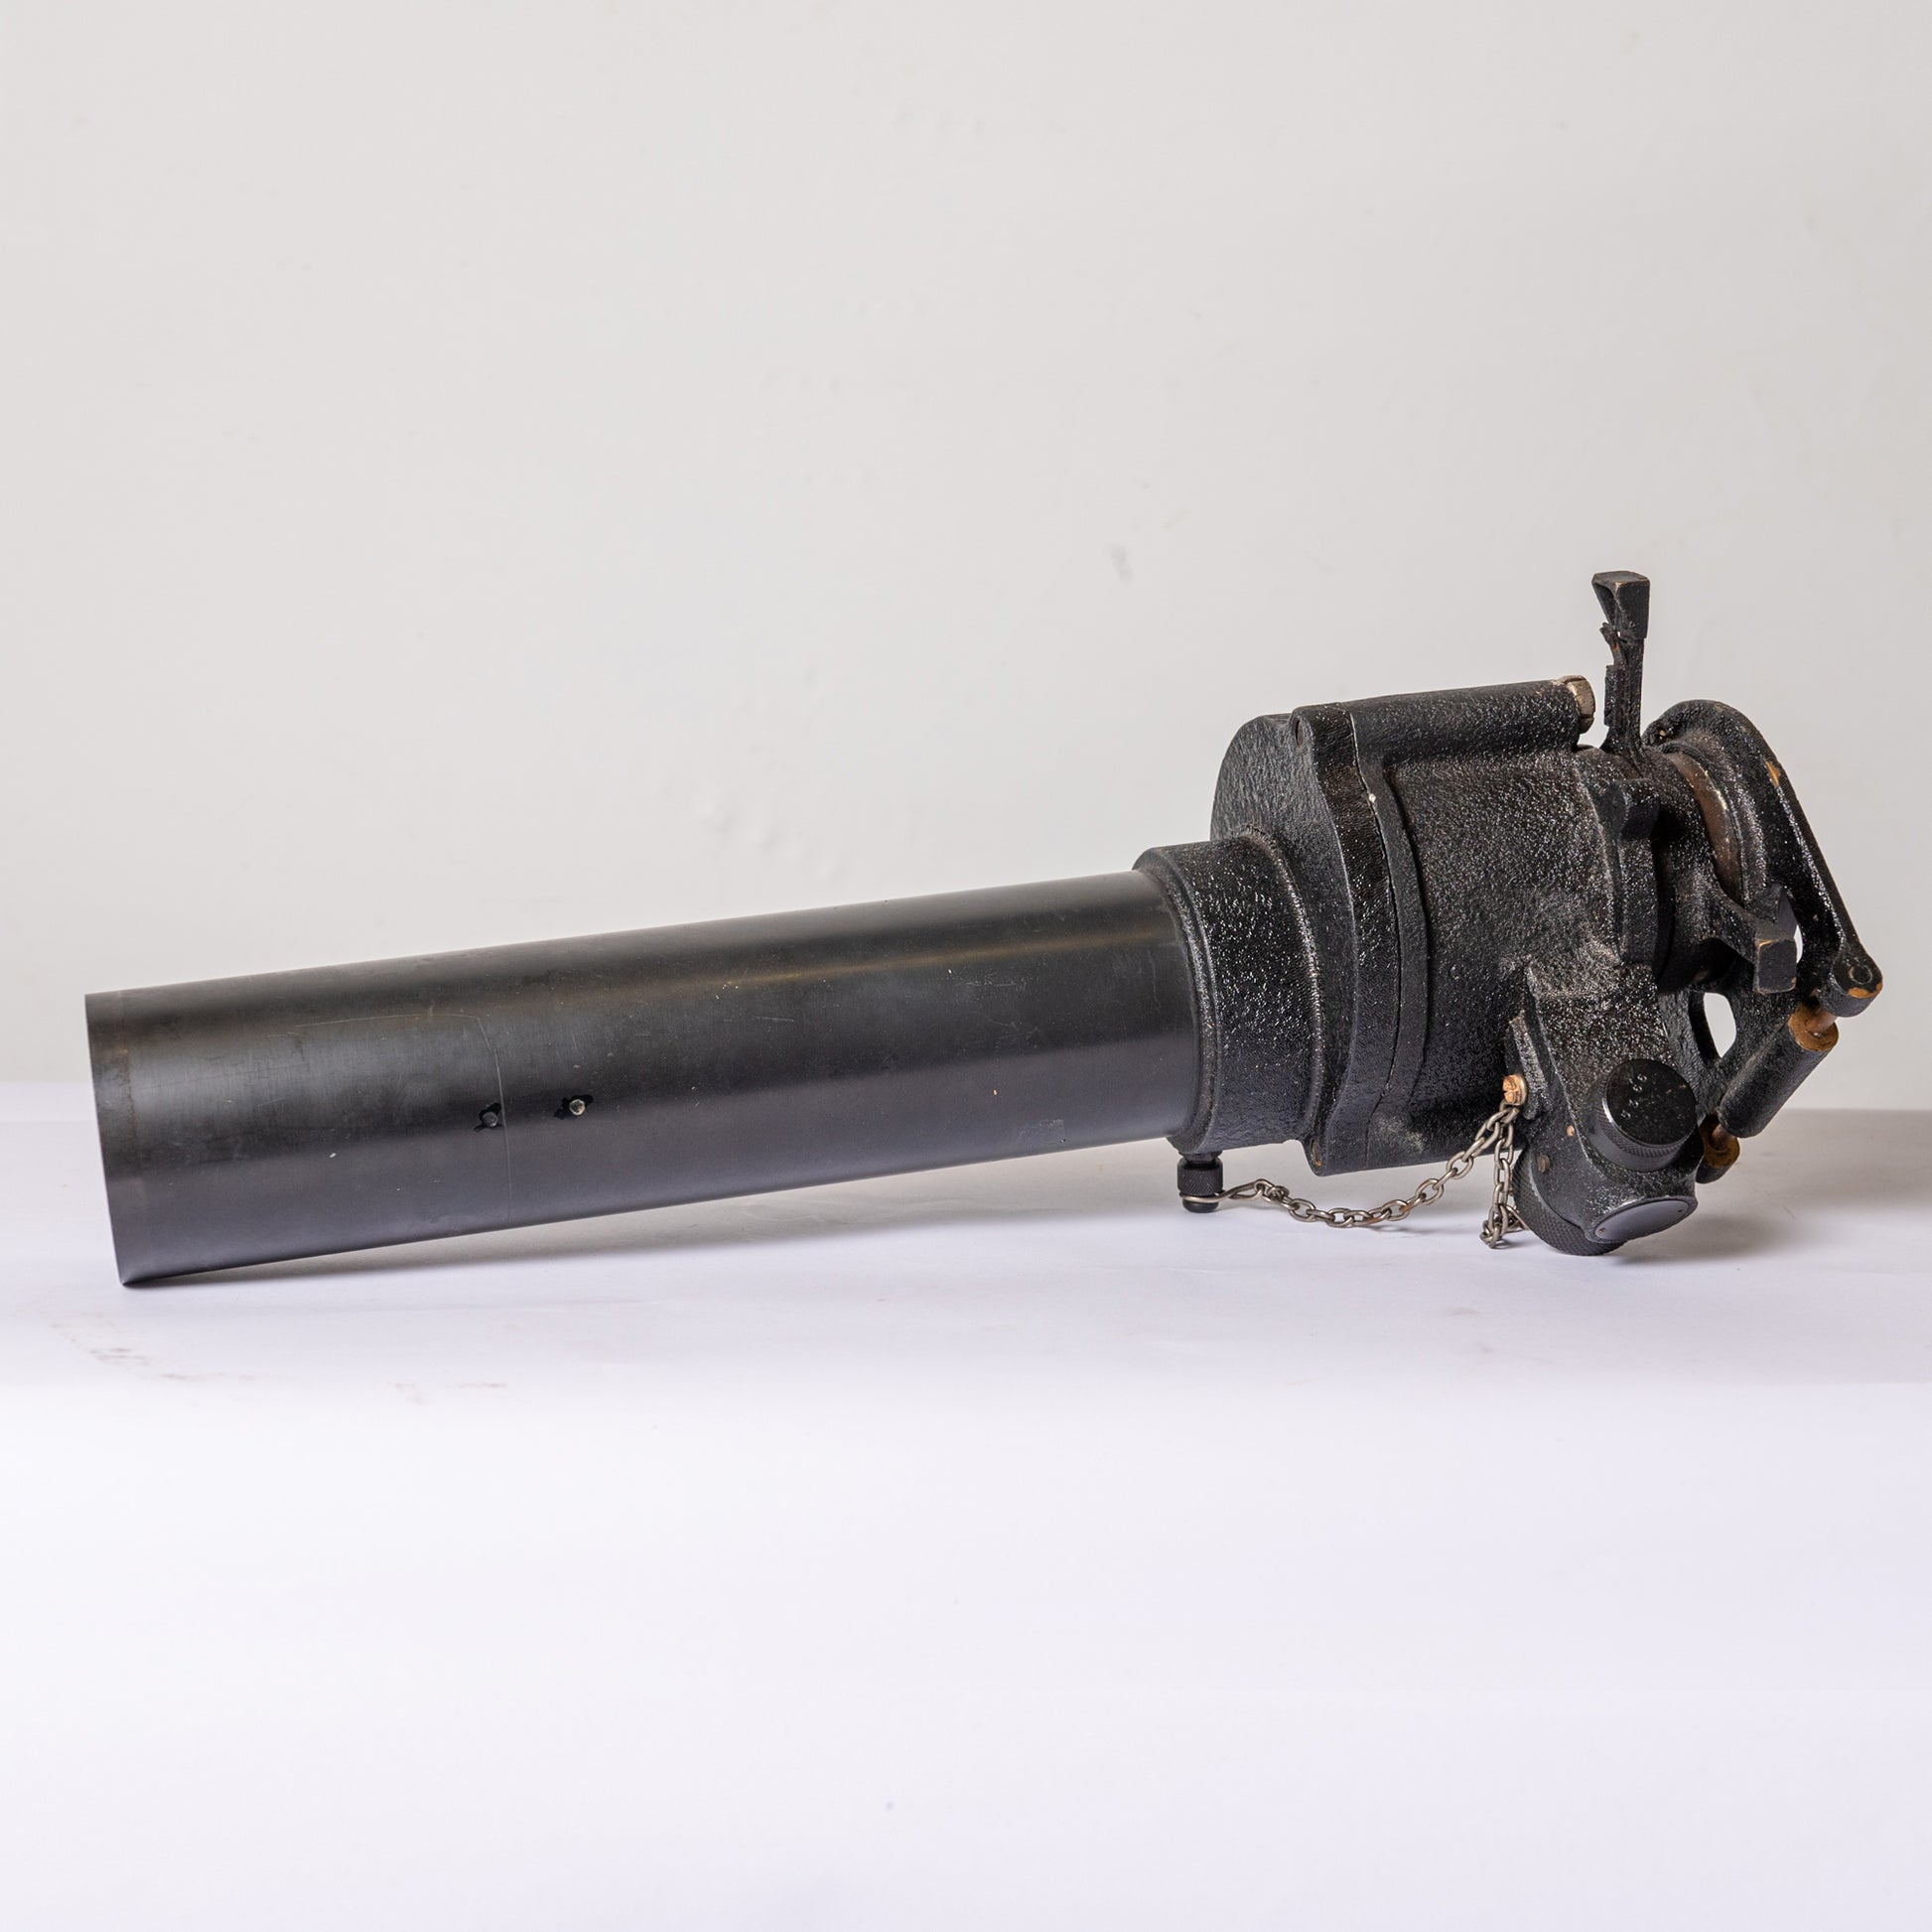 Vintage WWII Kodak Gun Sighting Telescope 7x50 PATT G 376 with Original Case